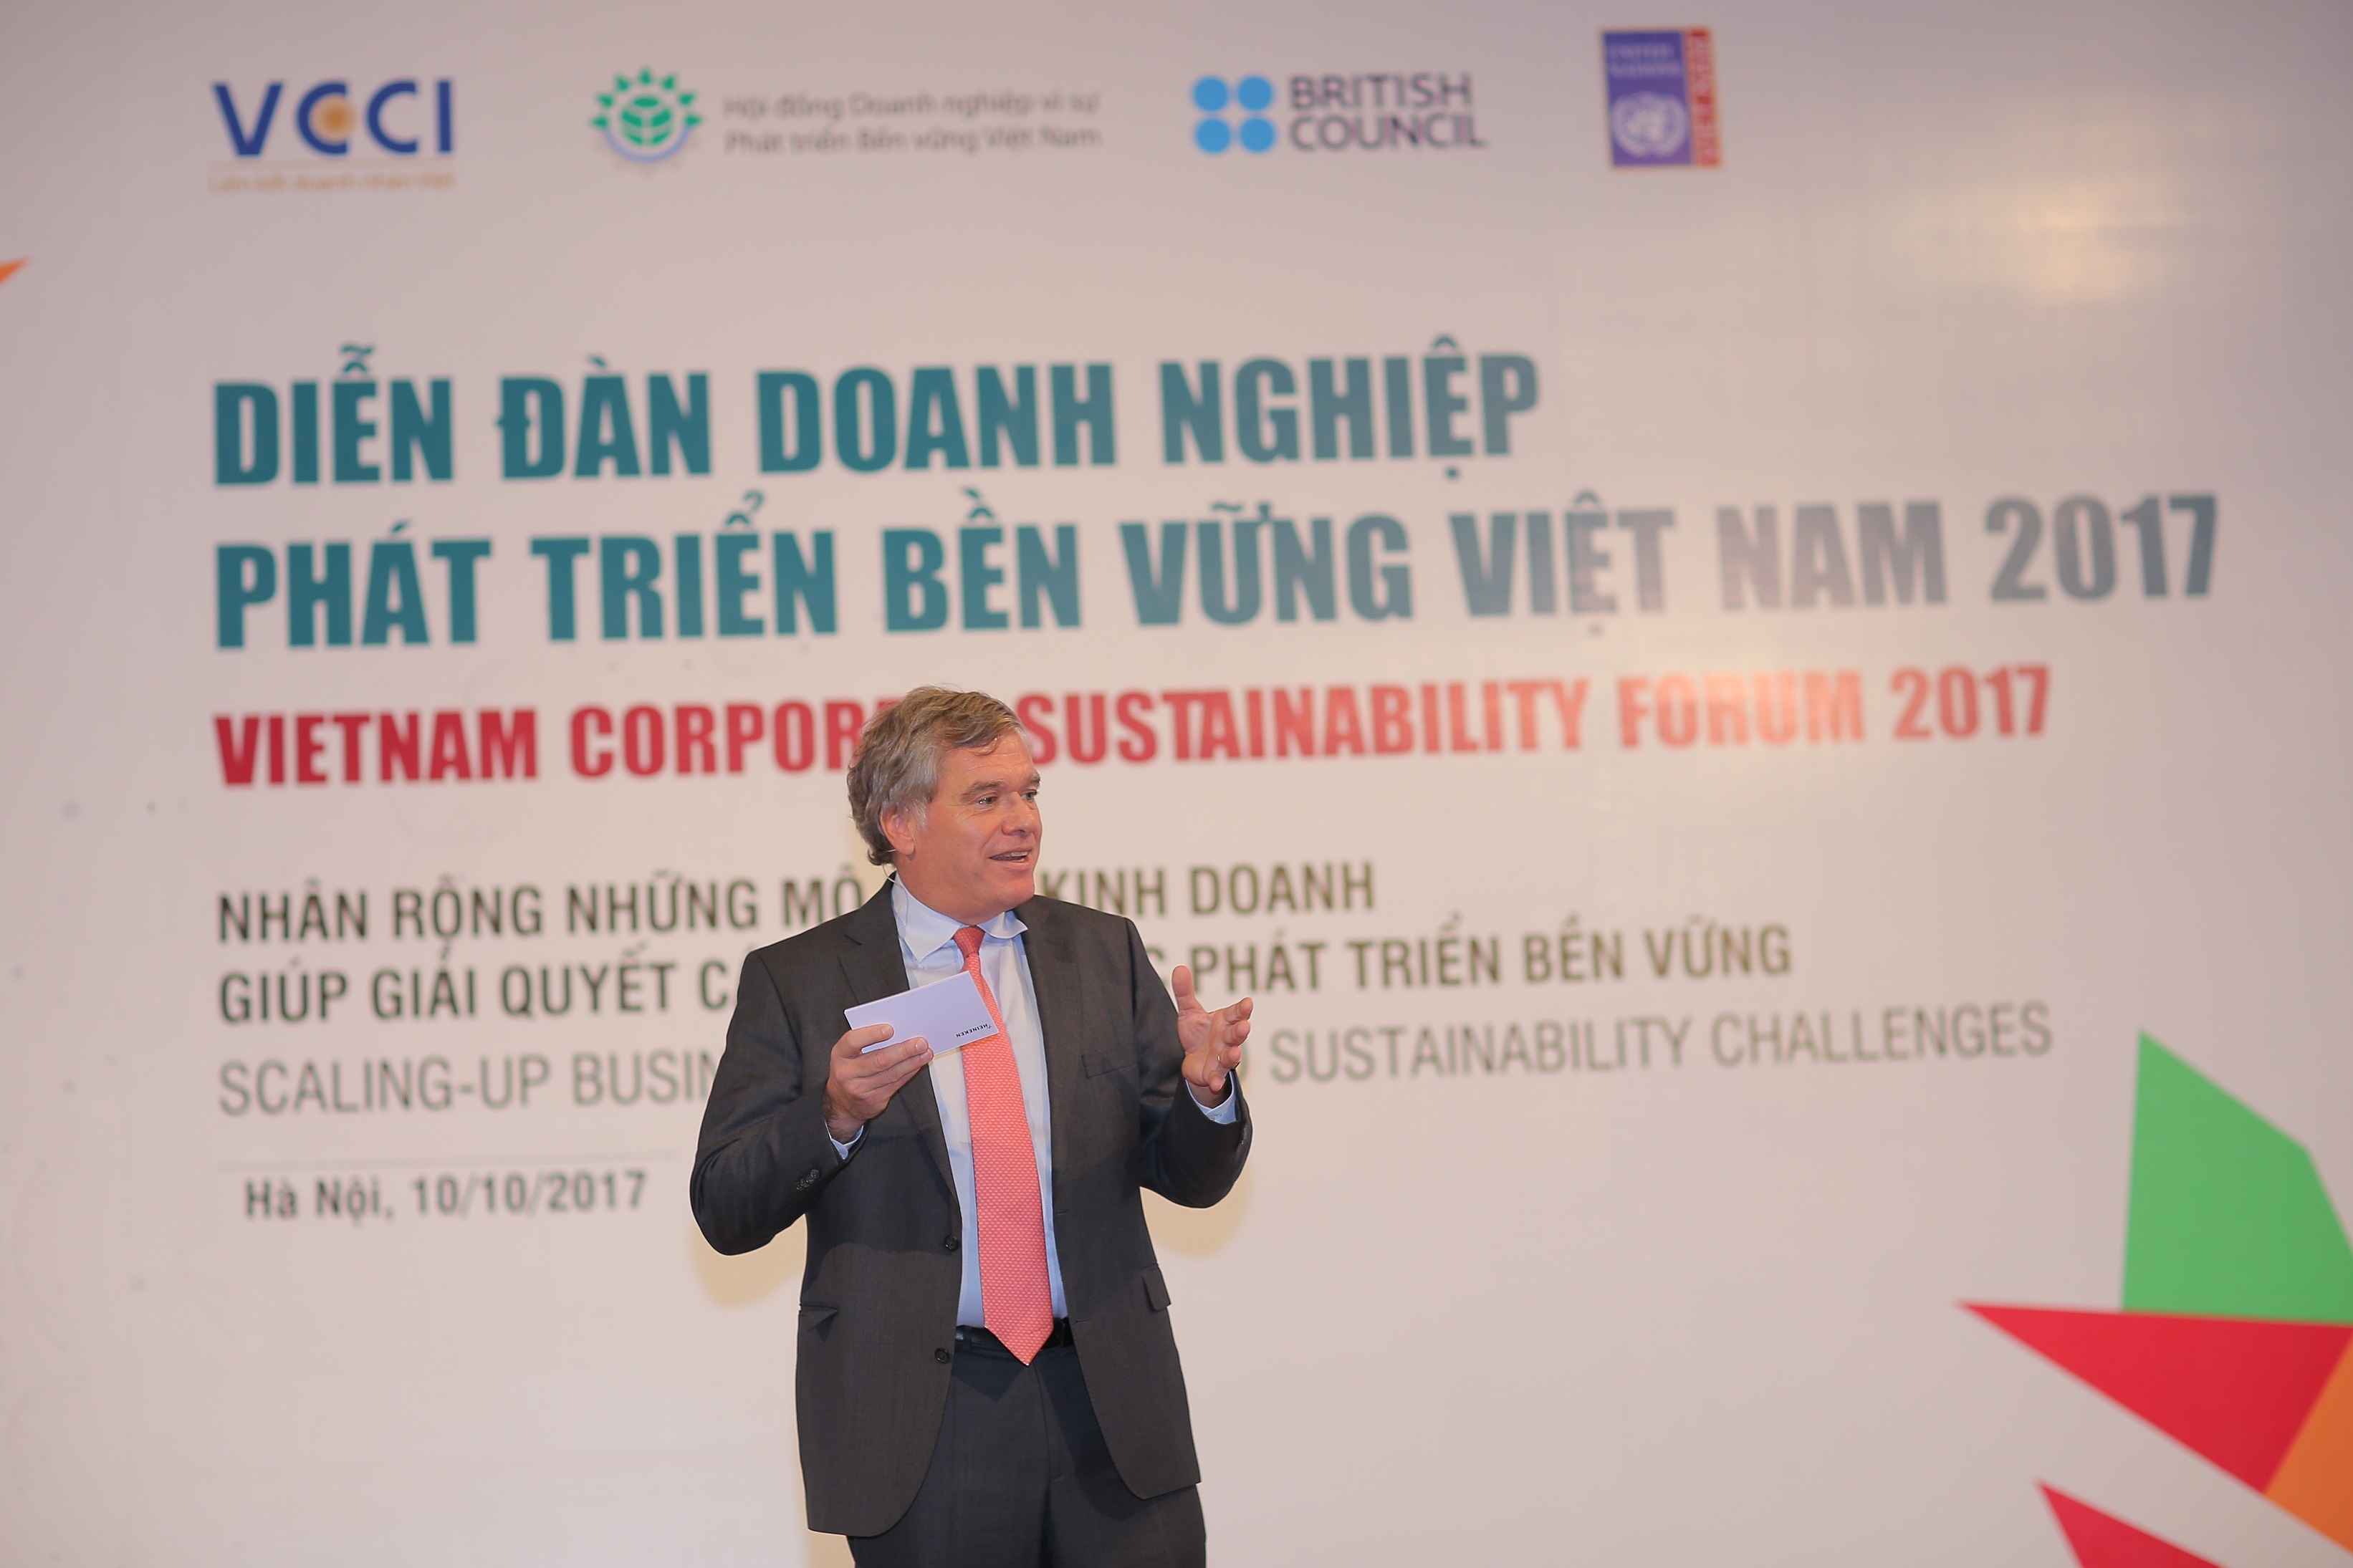 Heineken Vietnam recognised at Vietnam Corporate Sustainability Forum